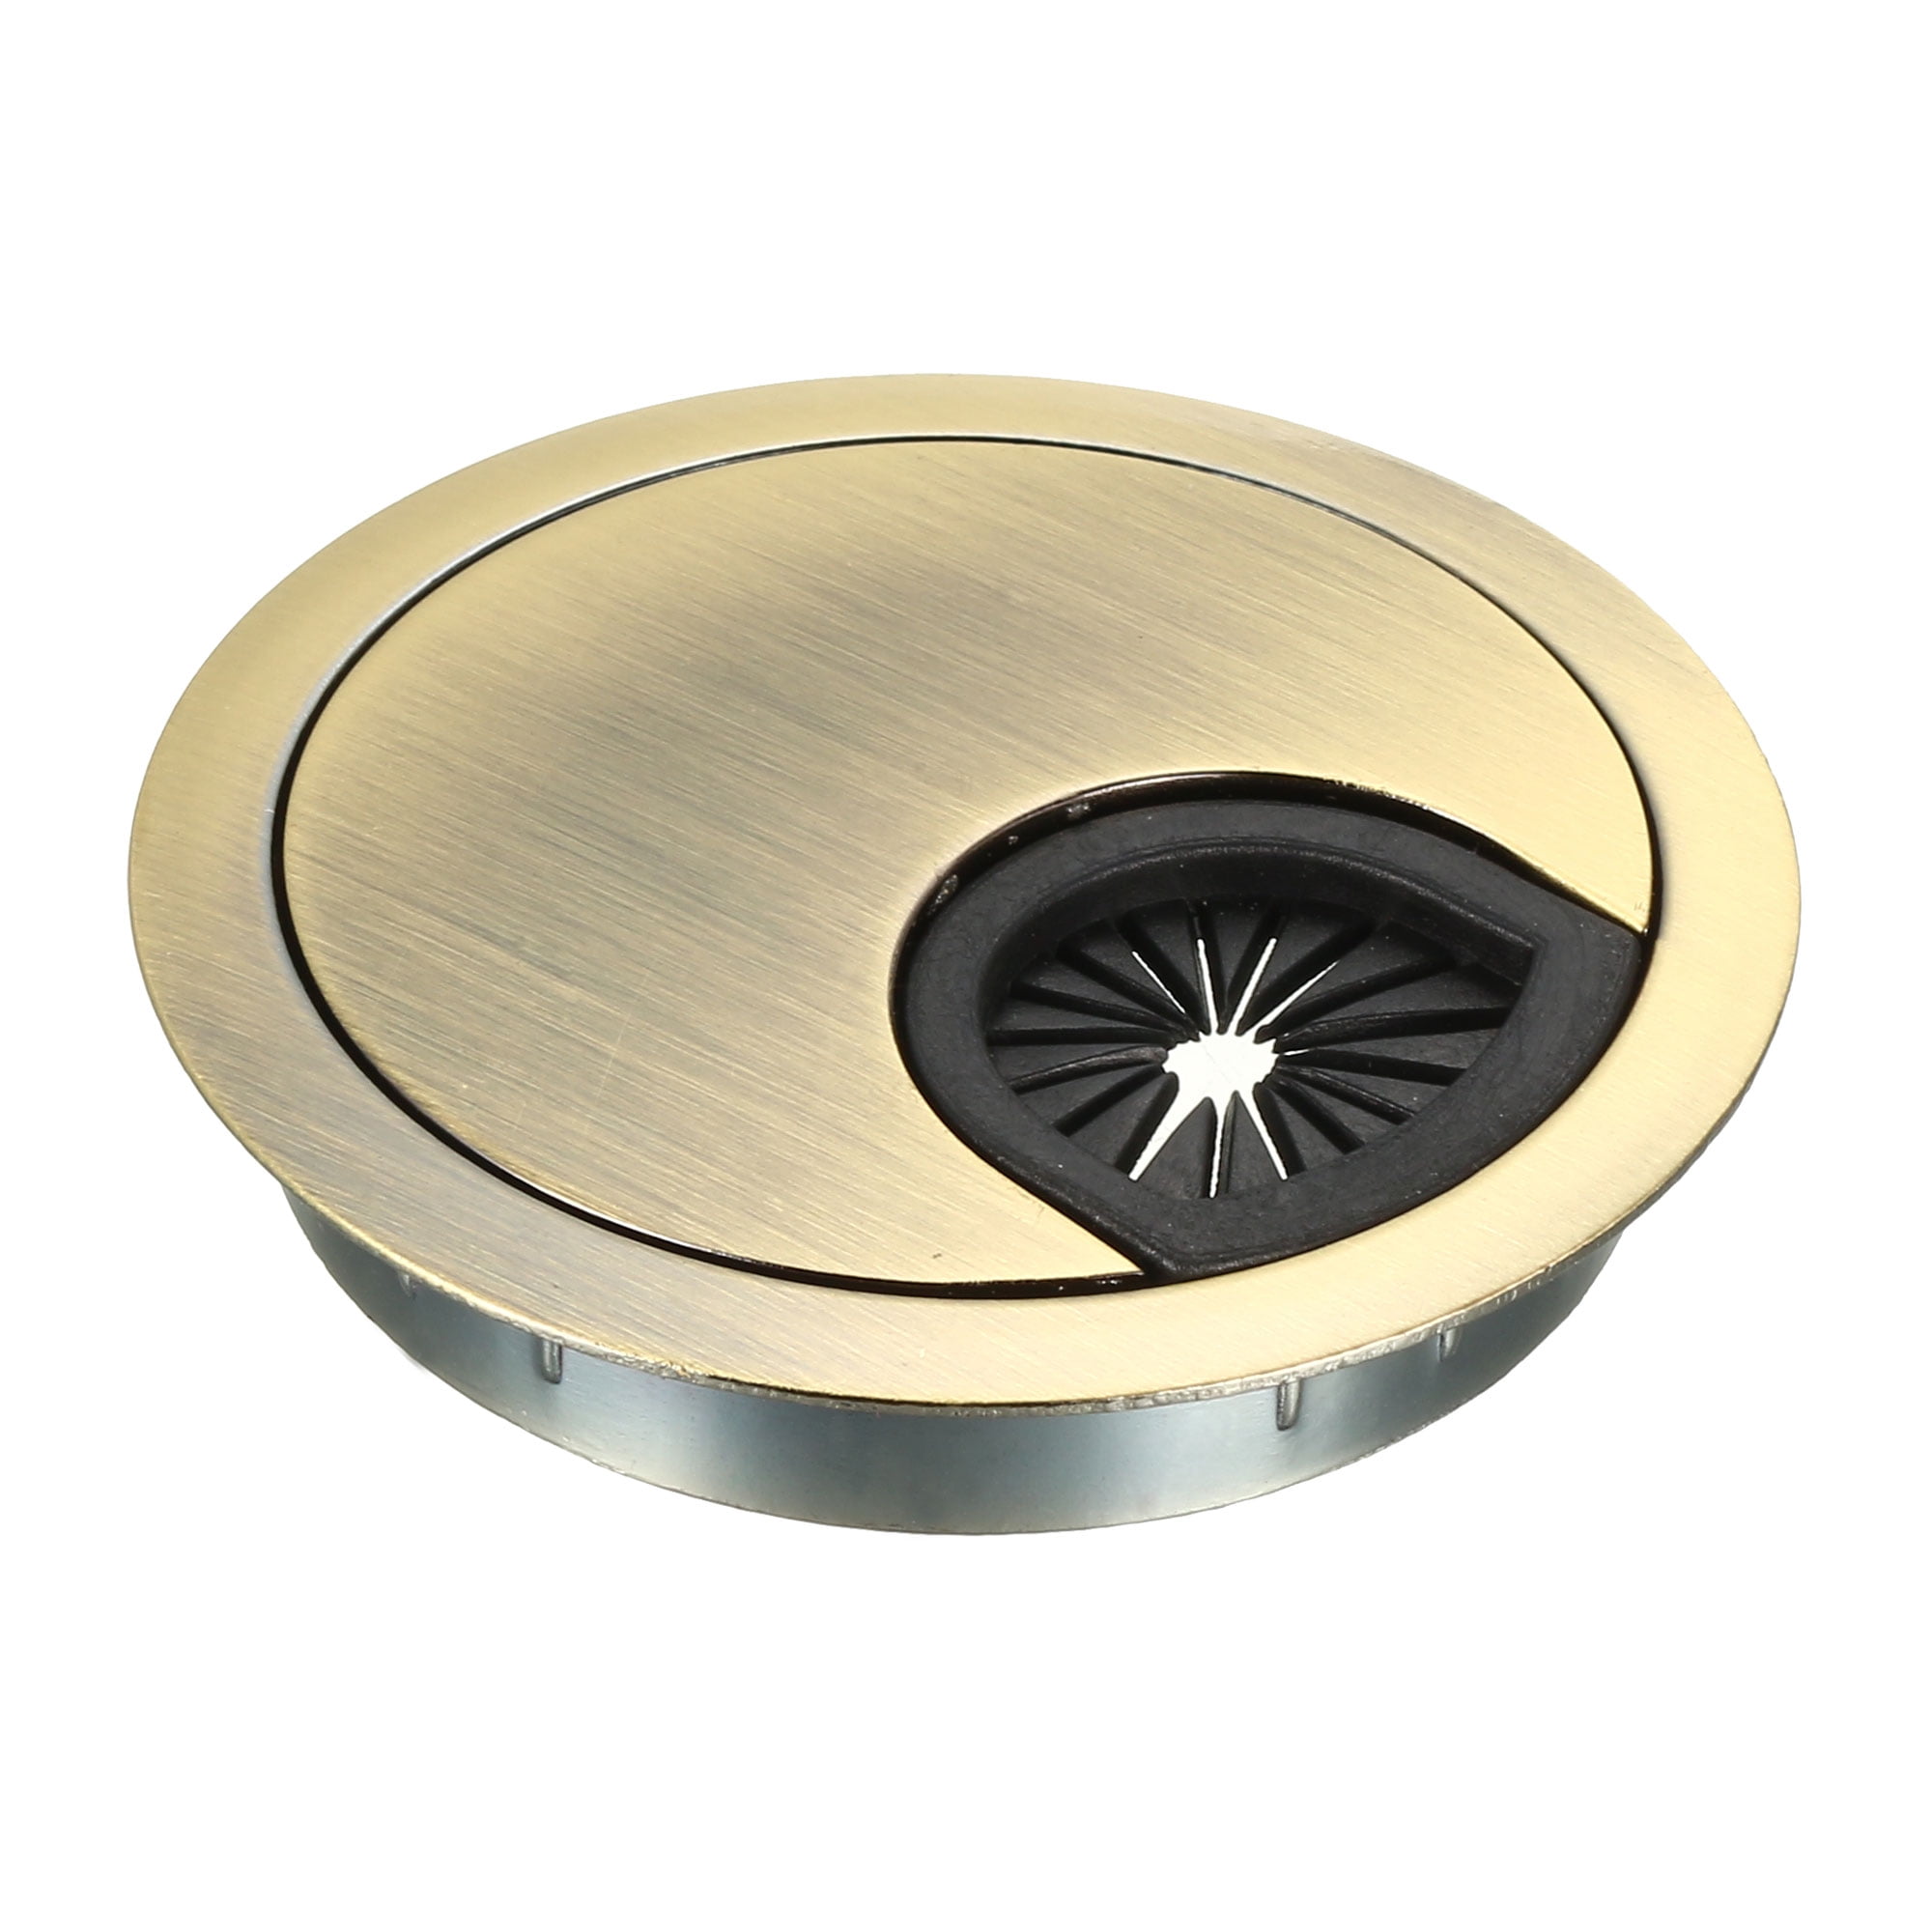 10pcs 60mm O-Ring Round Eyelet Metal Grommet Light Gold Tone Washer Grommets 